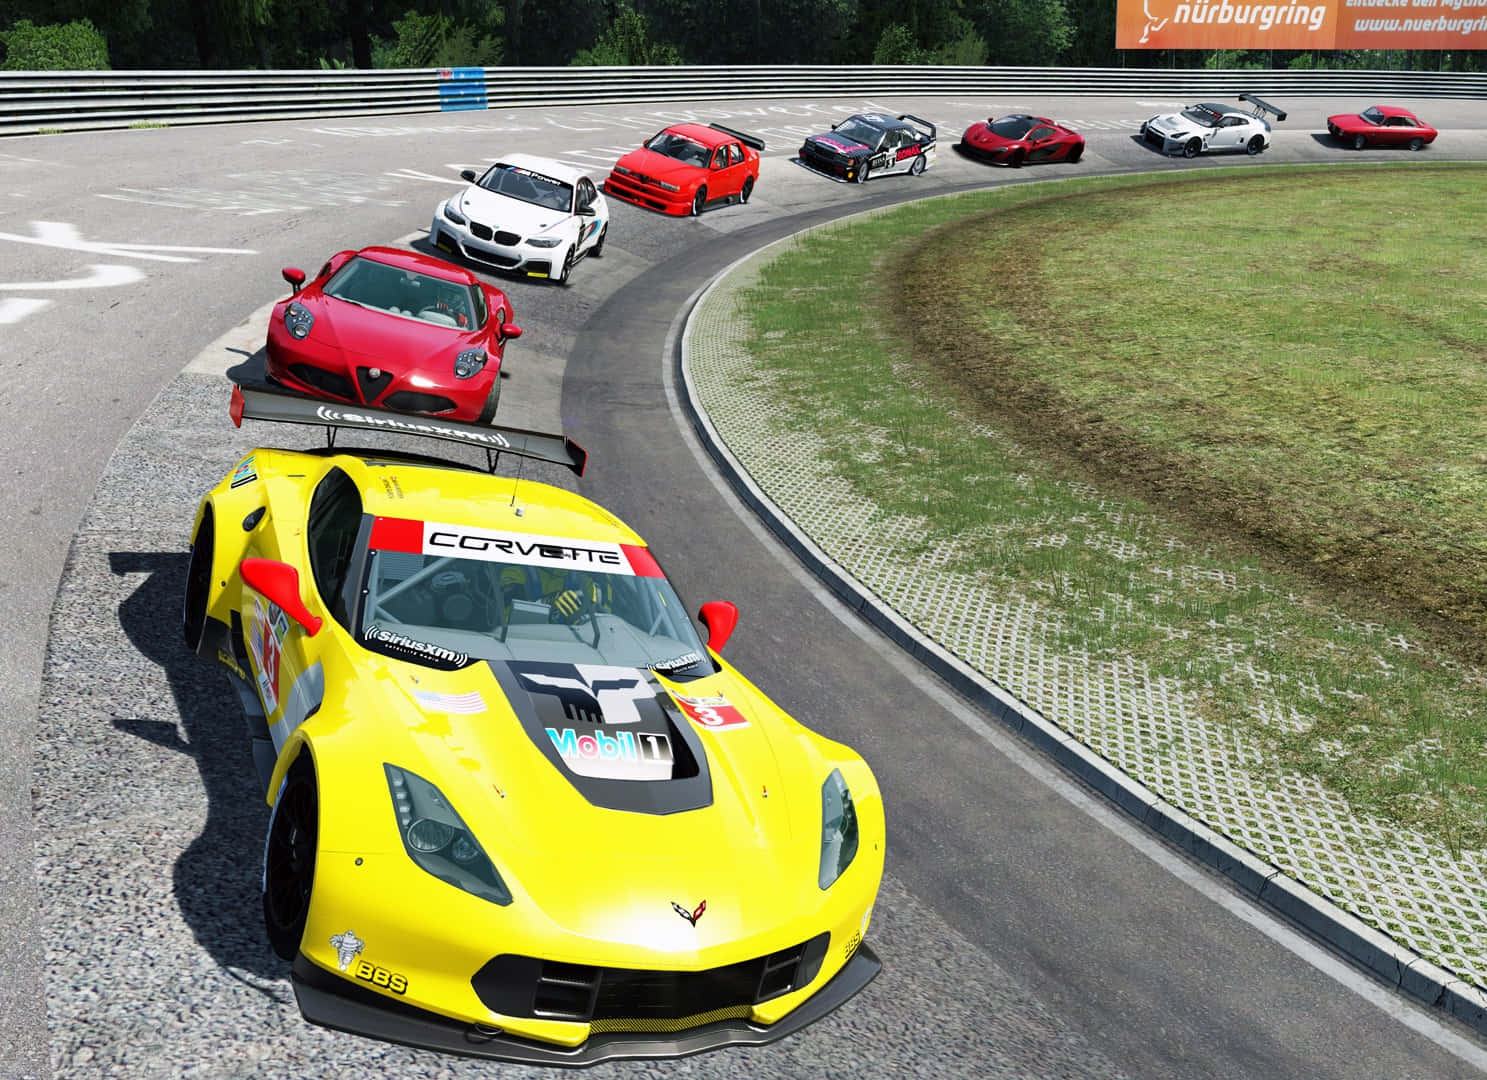 Intense Car Racing Action Wallpaper